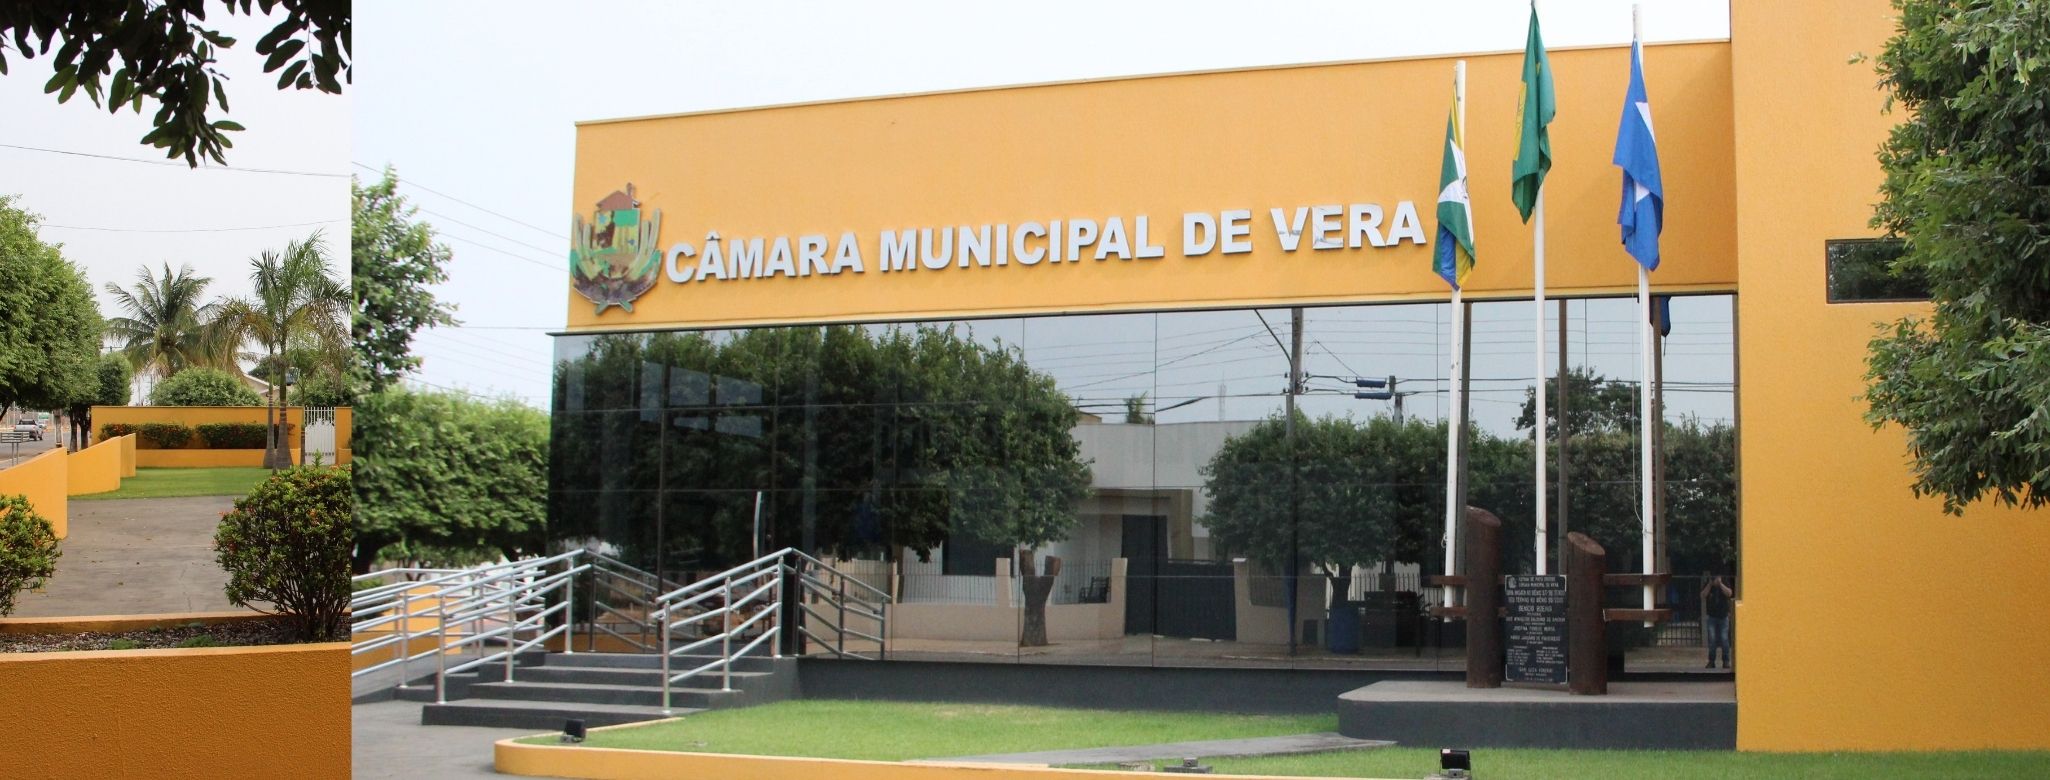 Foto da Câmara Municipal de Vera